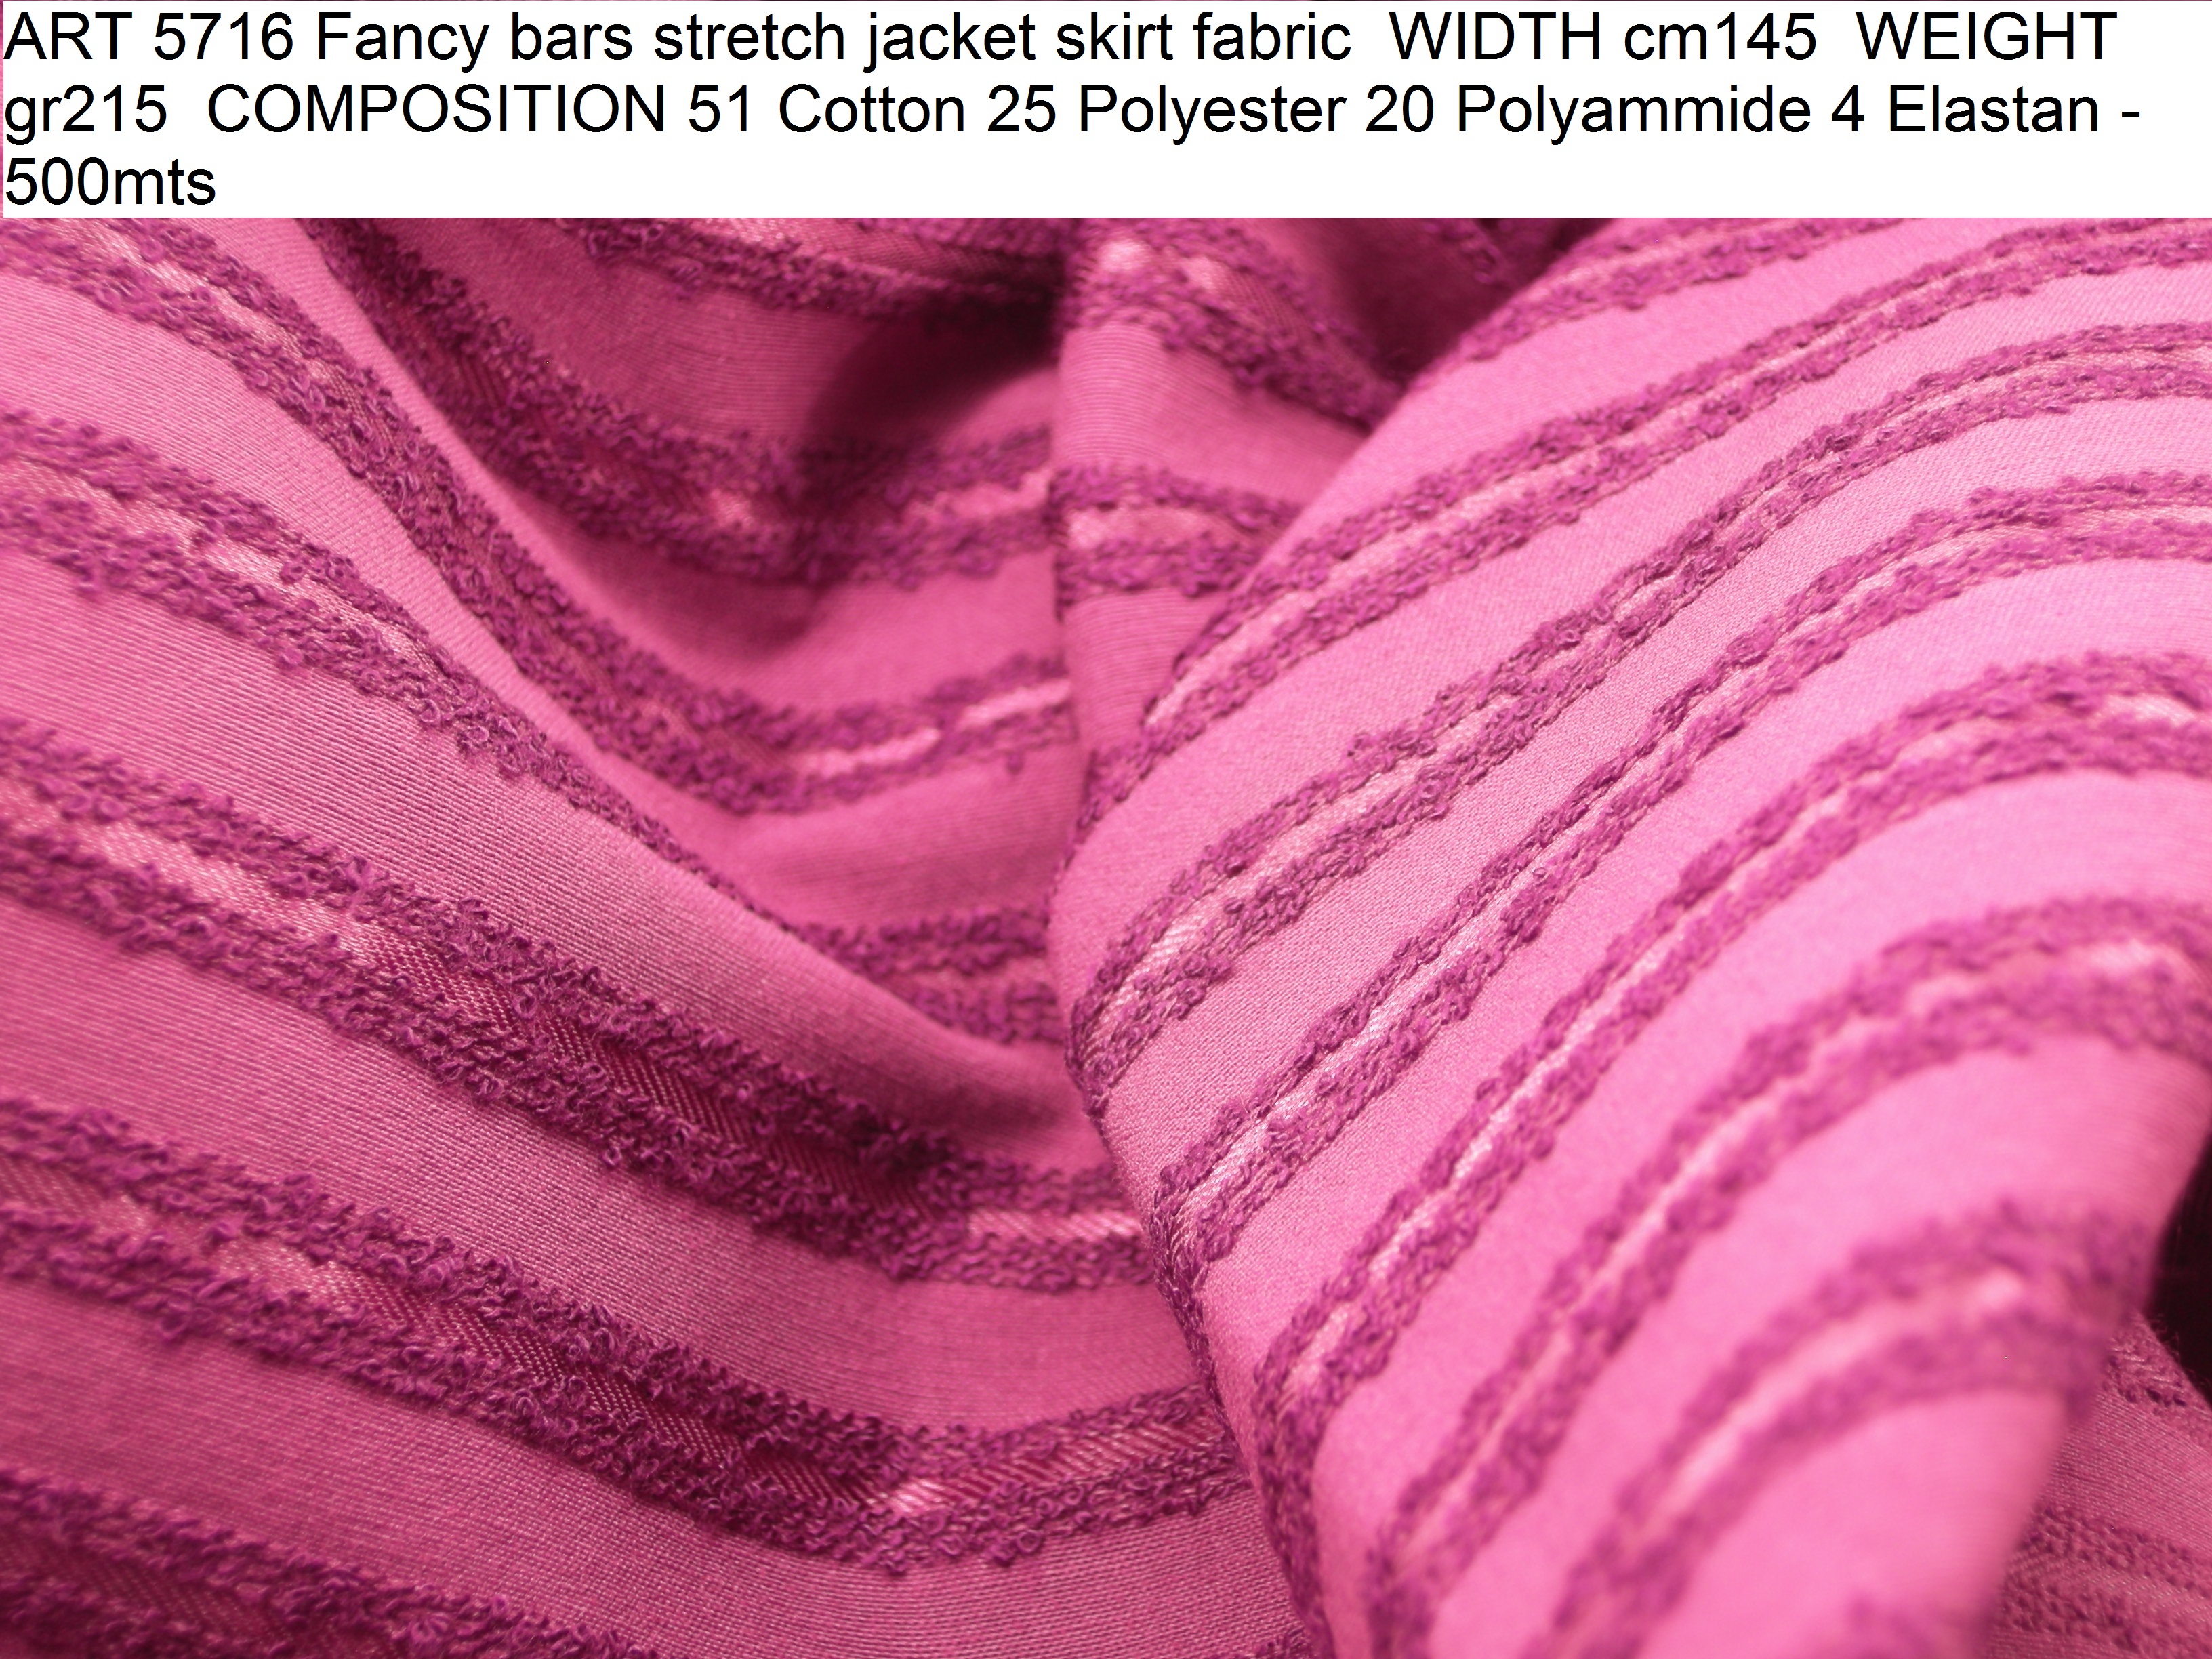 ART 5716 Fancy bars stretch jacket skirt fabric WIDTH cm145 WEIGHT gr215 COMPOSITION 51 Cotton 25 Polyester 20 Polyammide 4 Elastan - 500mts